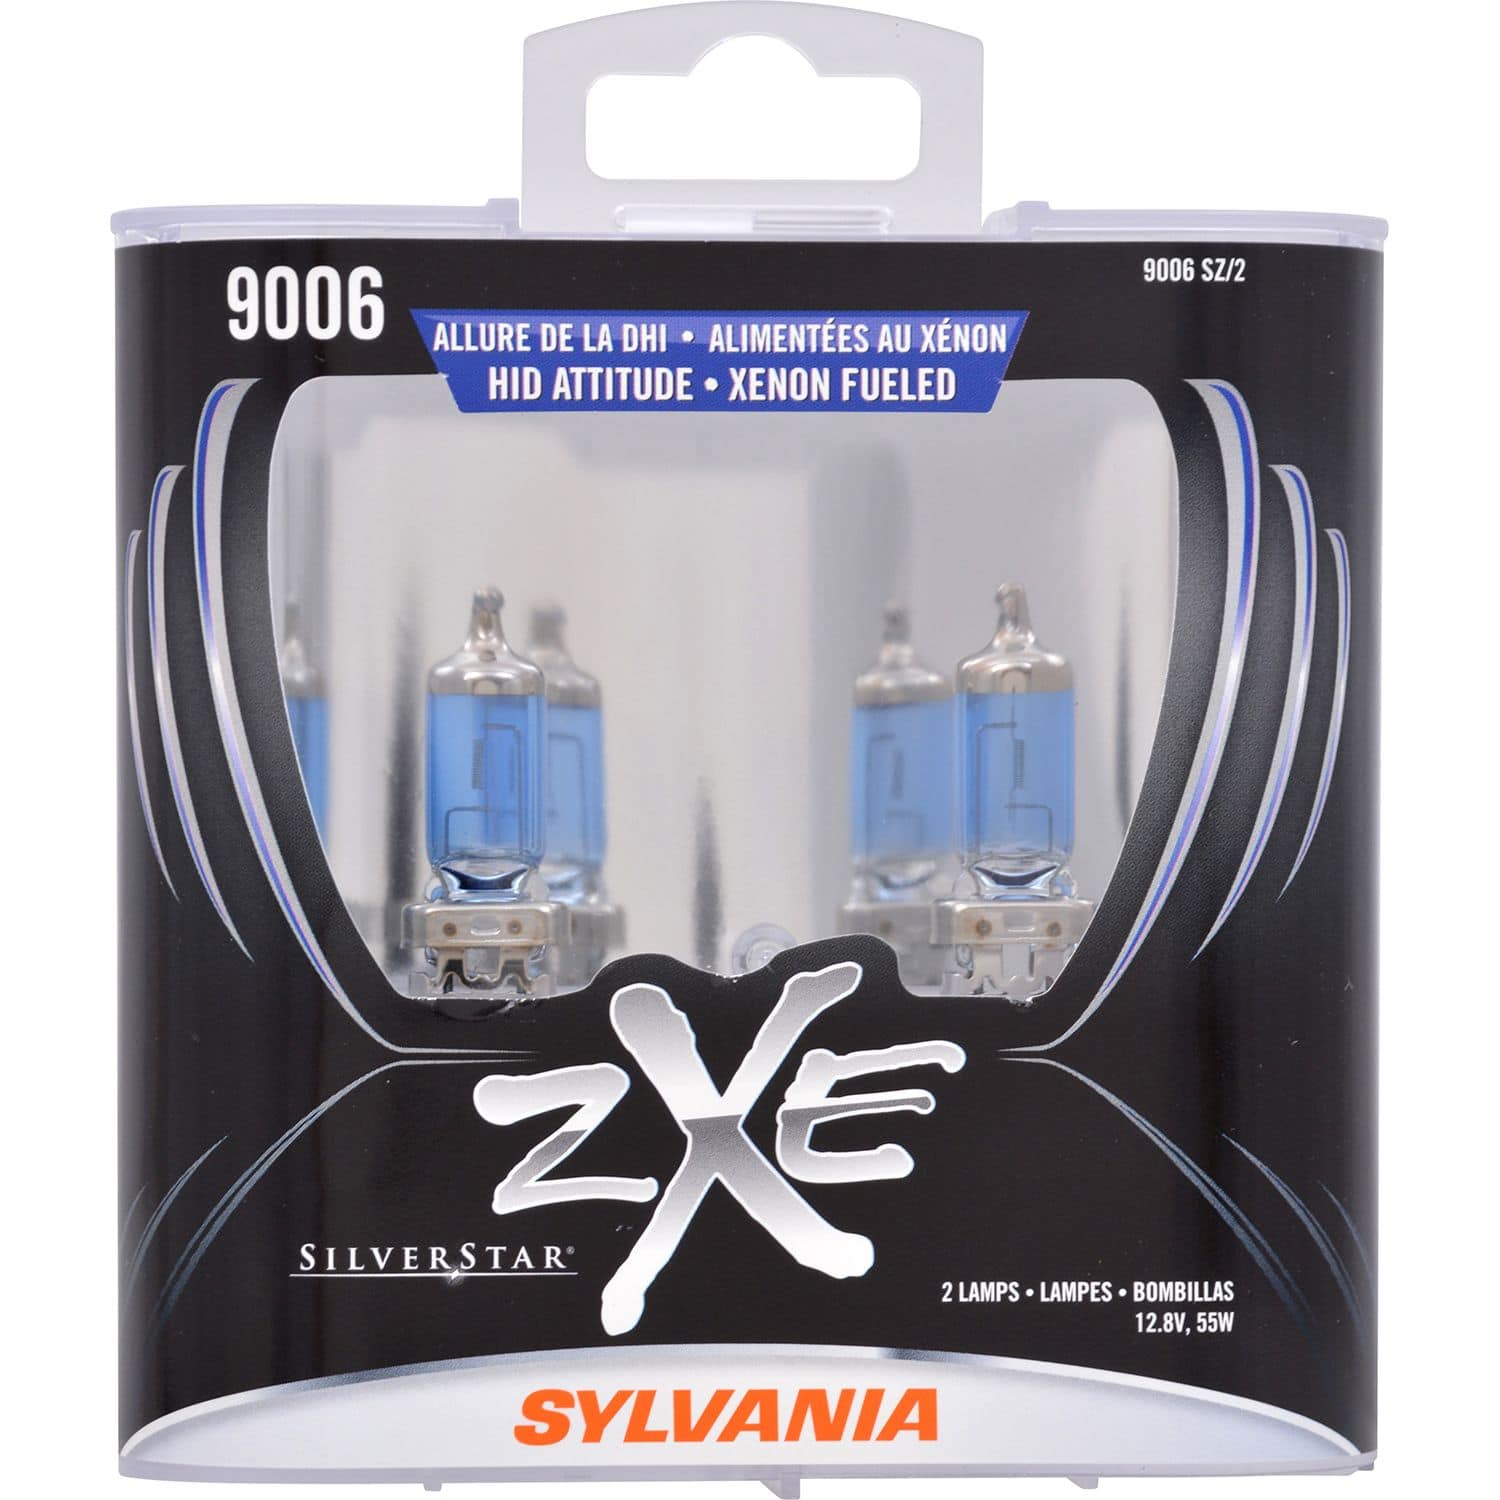 9006 Sylvania SilverStar® zXe Headlight Bulb, 2-pk